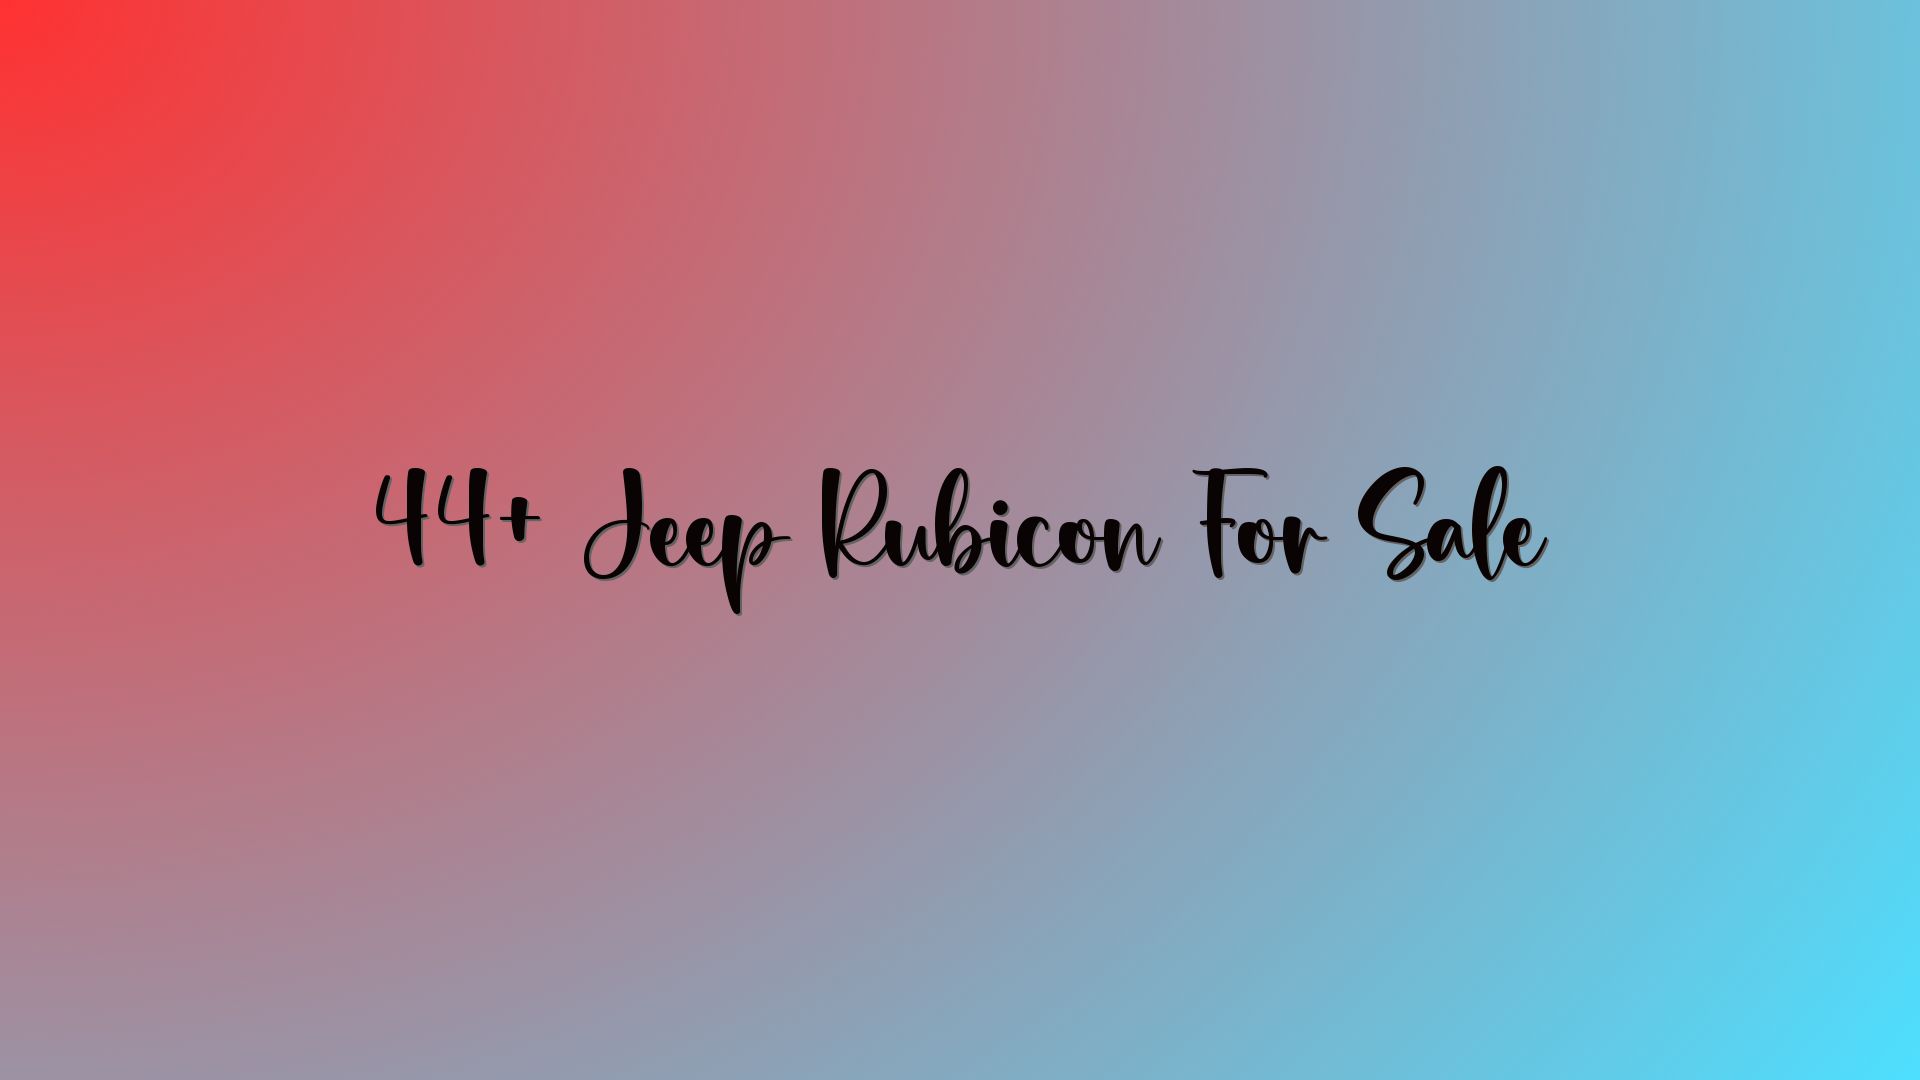 44+ Jeep Rubicon For Sale